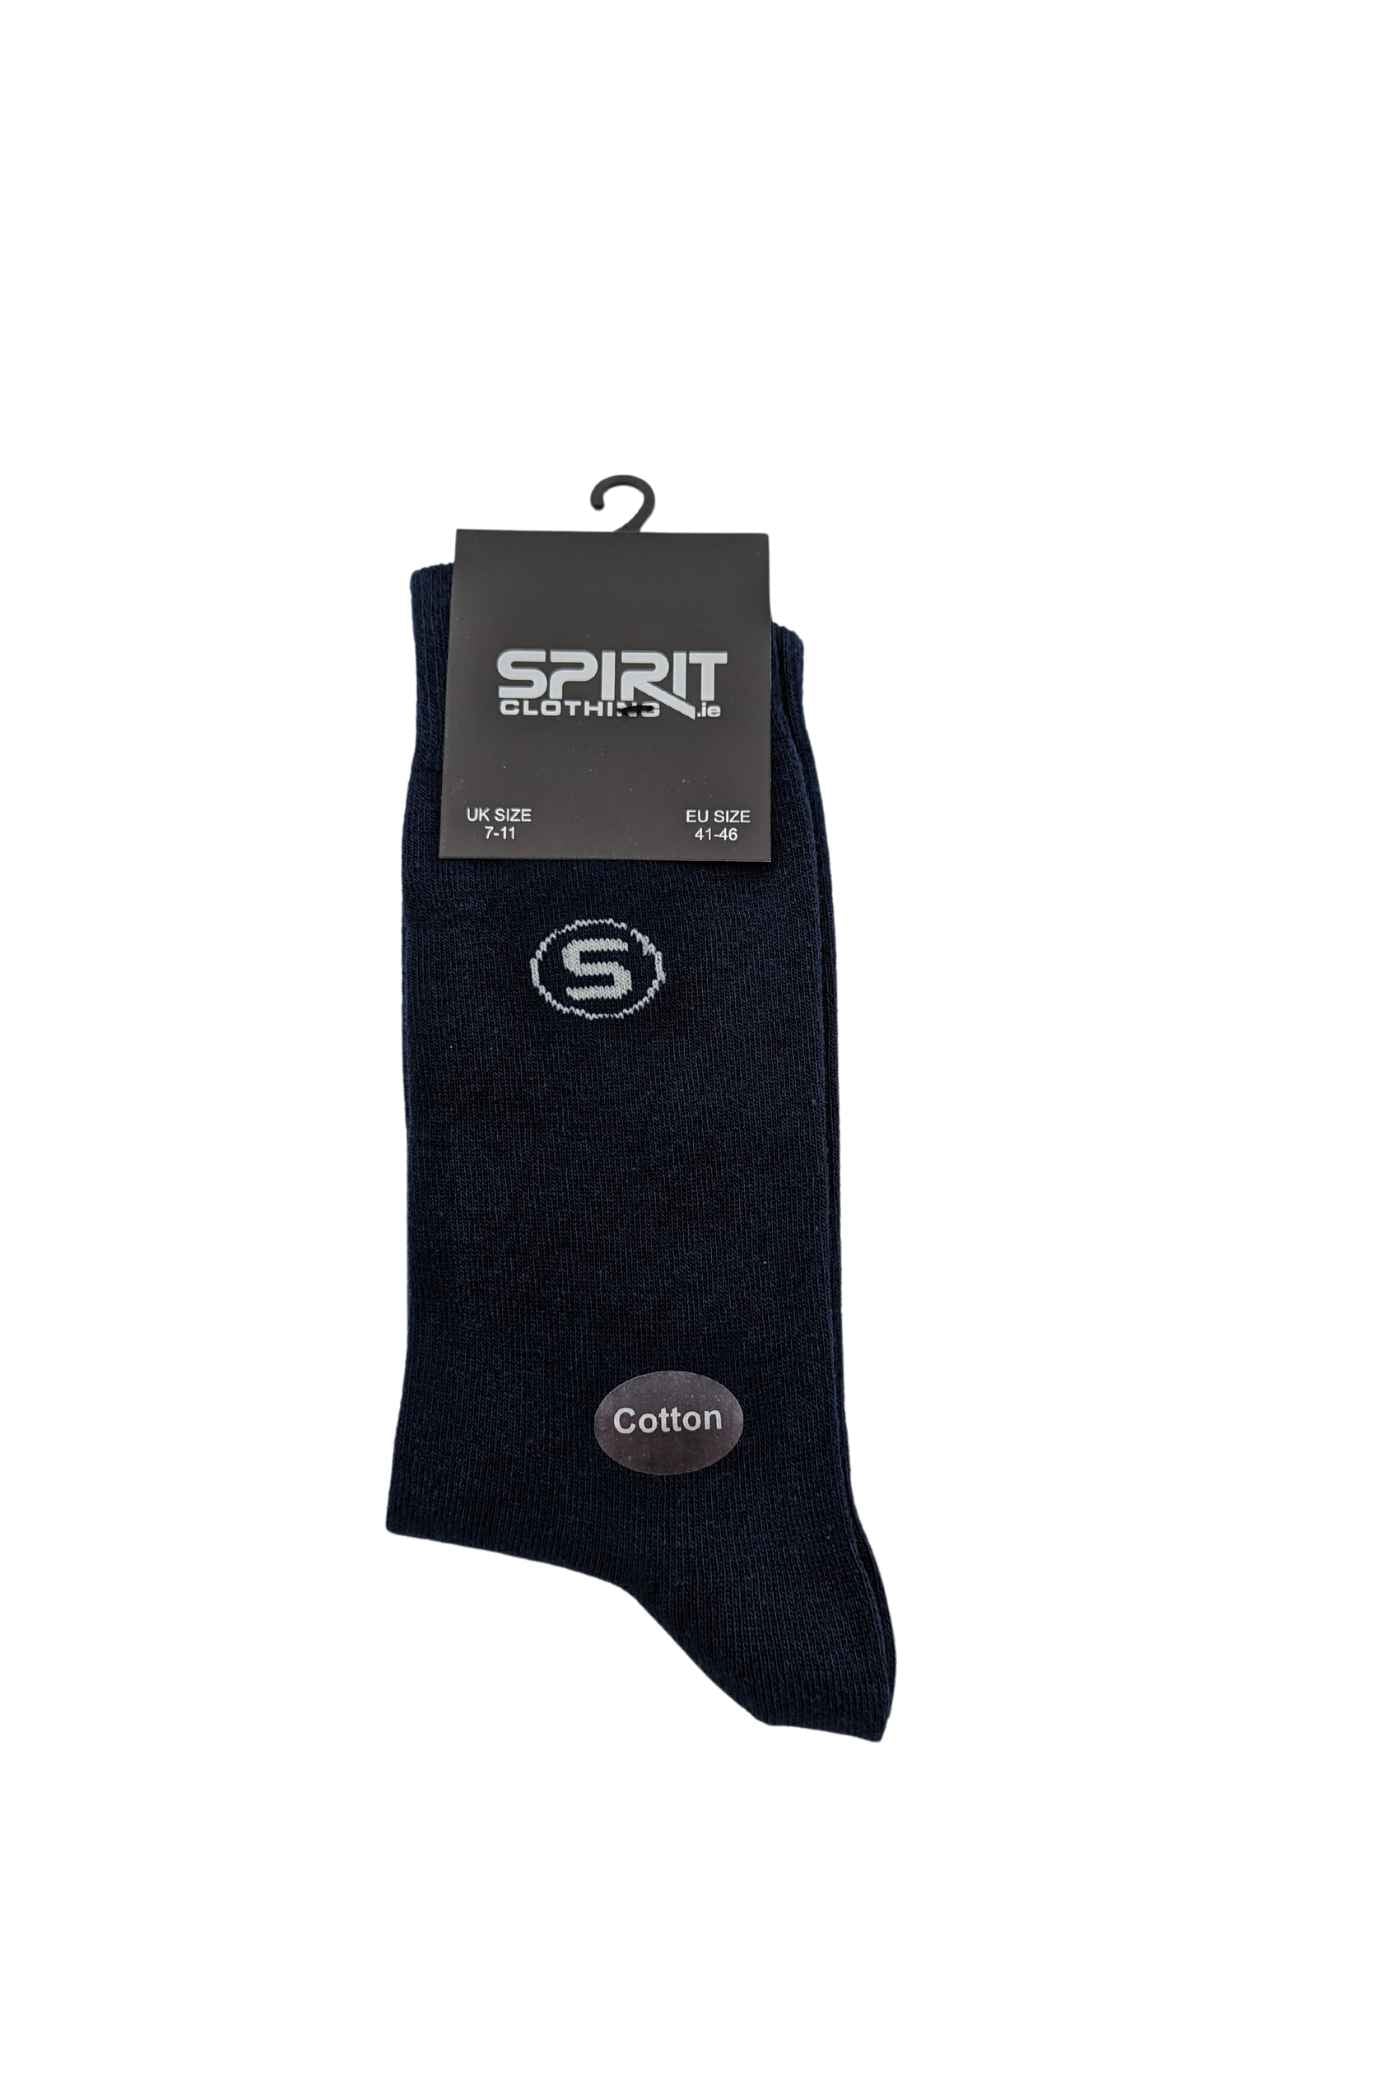 Spirit Mens Navy Sock